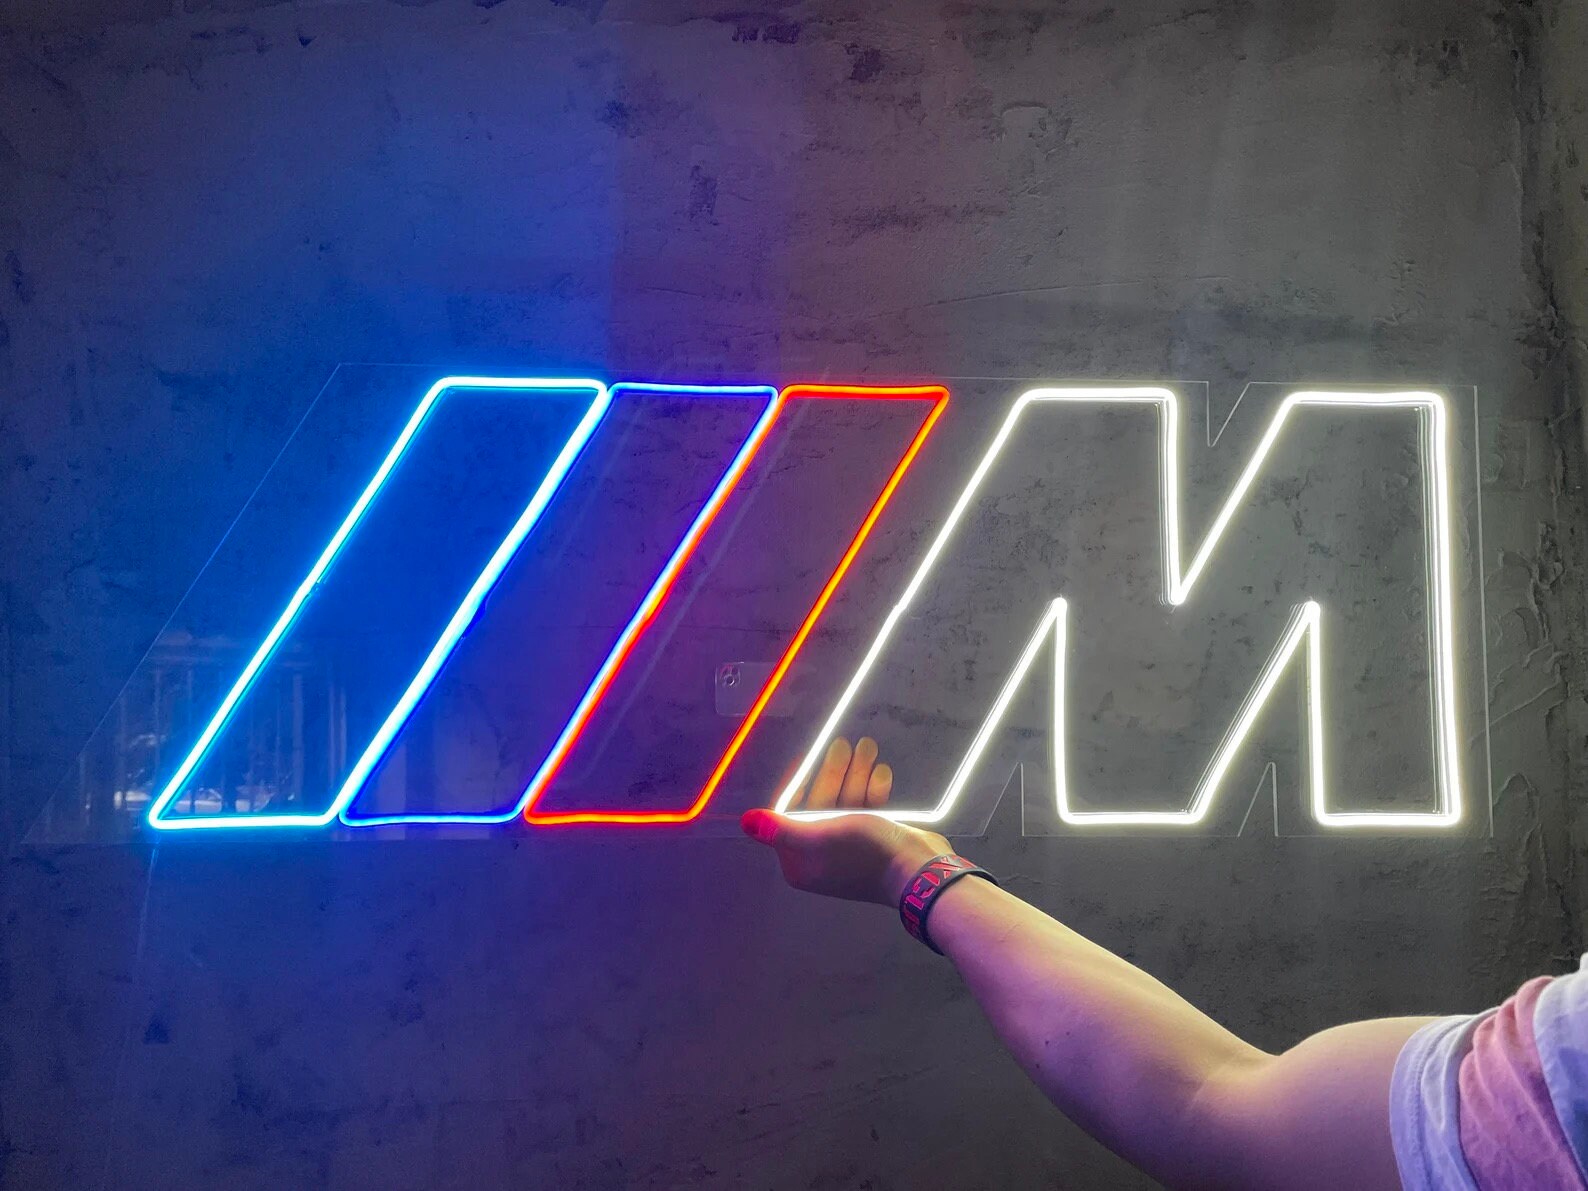 Bmw M Logo Car Neon Sign Car Logo Custom LED Light Game room Bedroom Bar  Decor 